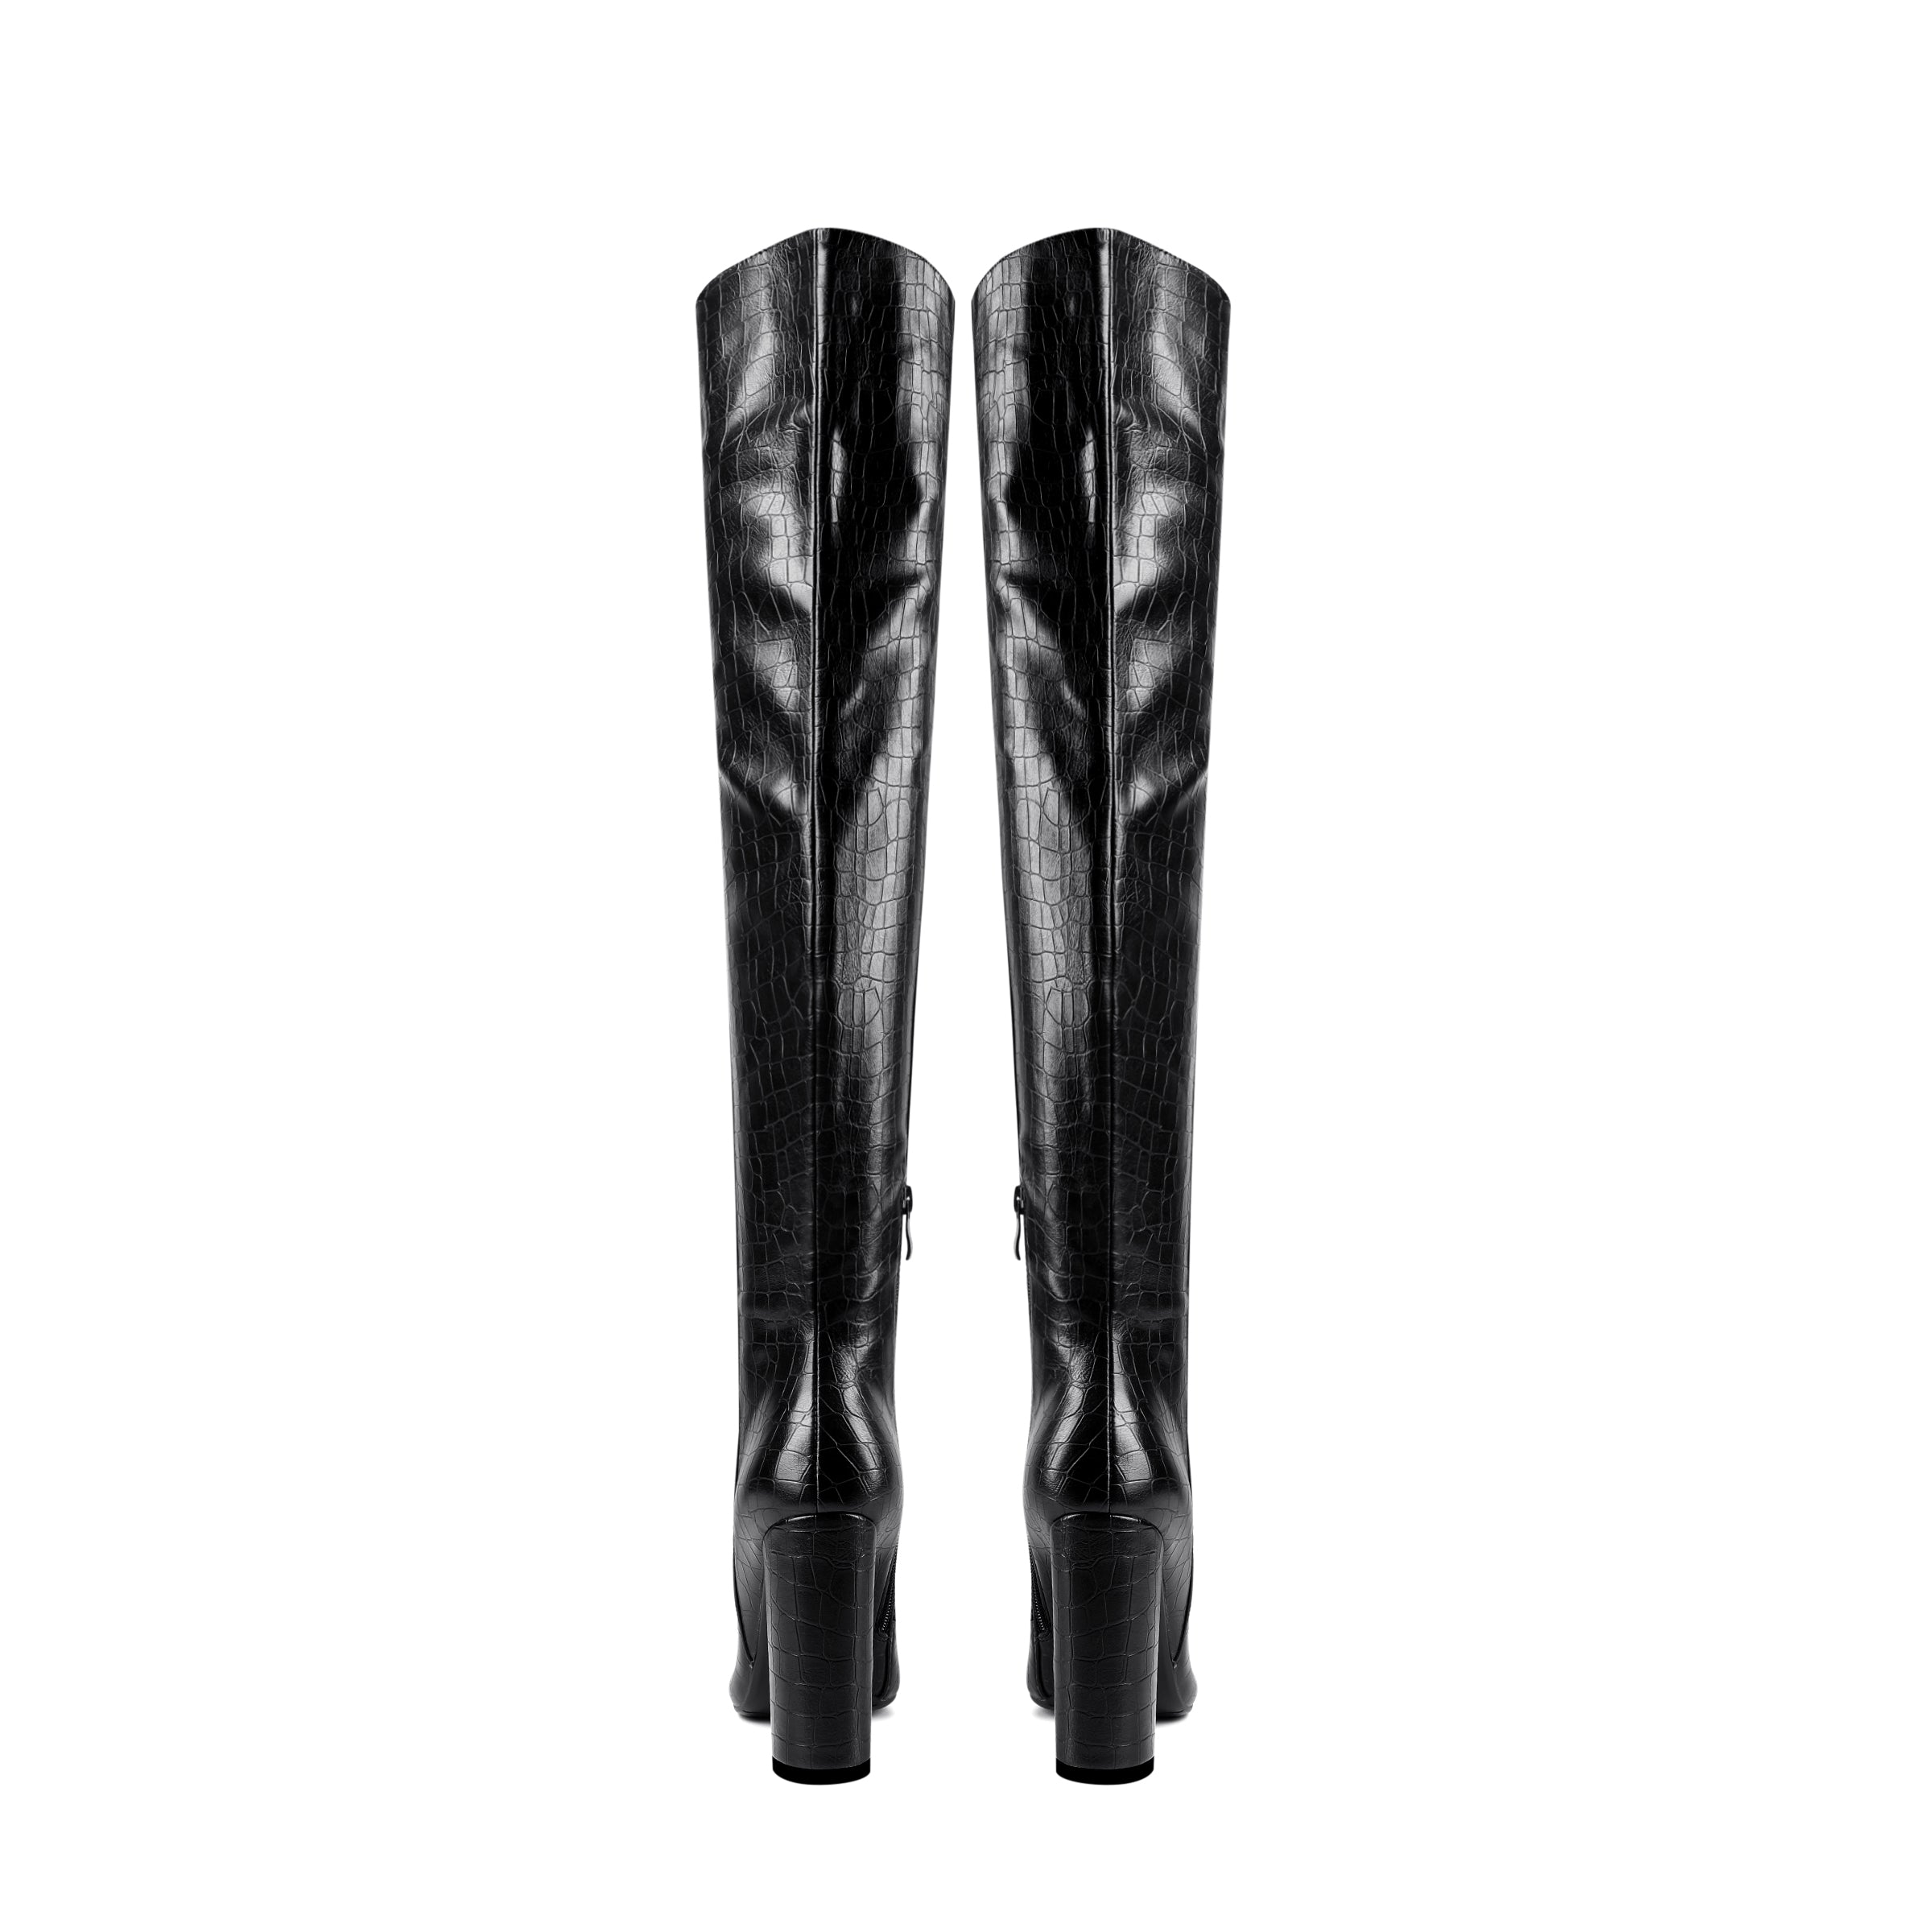 Bigsizeheels Embossed leather pointed toe chunky heel boots - Black freeshipping - bigsizeheel®-size5-size15 -All Plus Sizes Available!